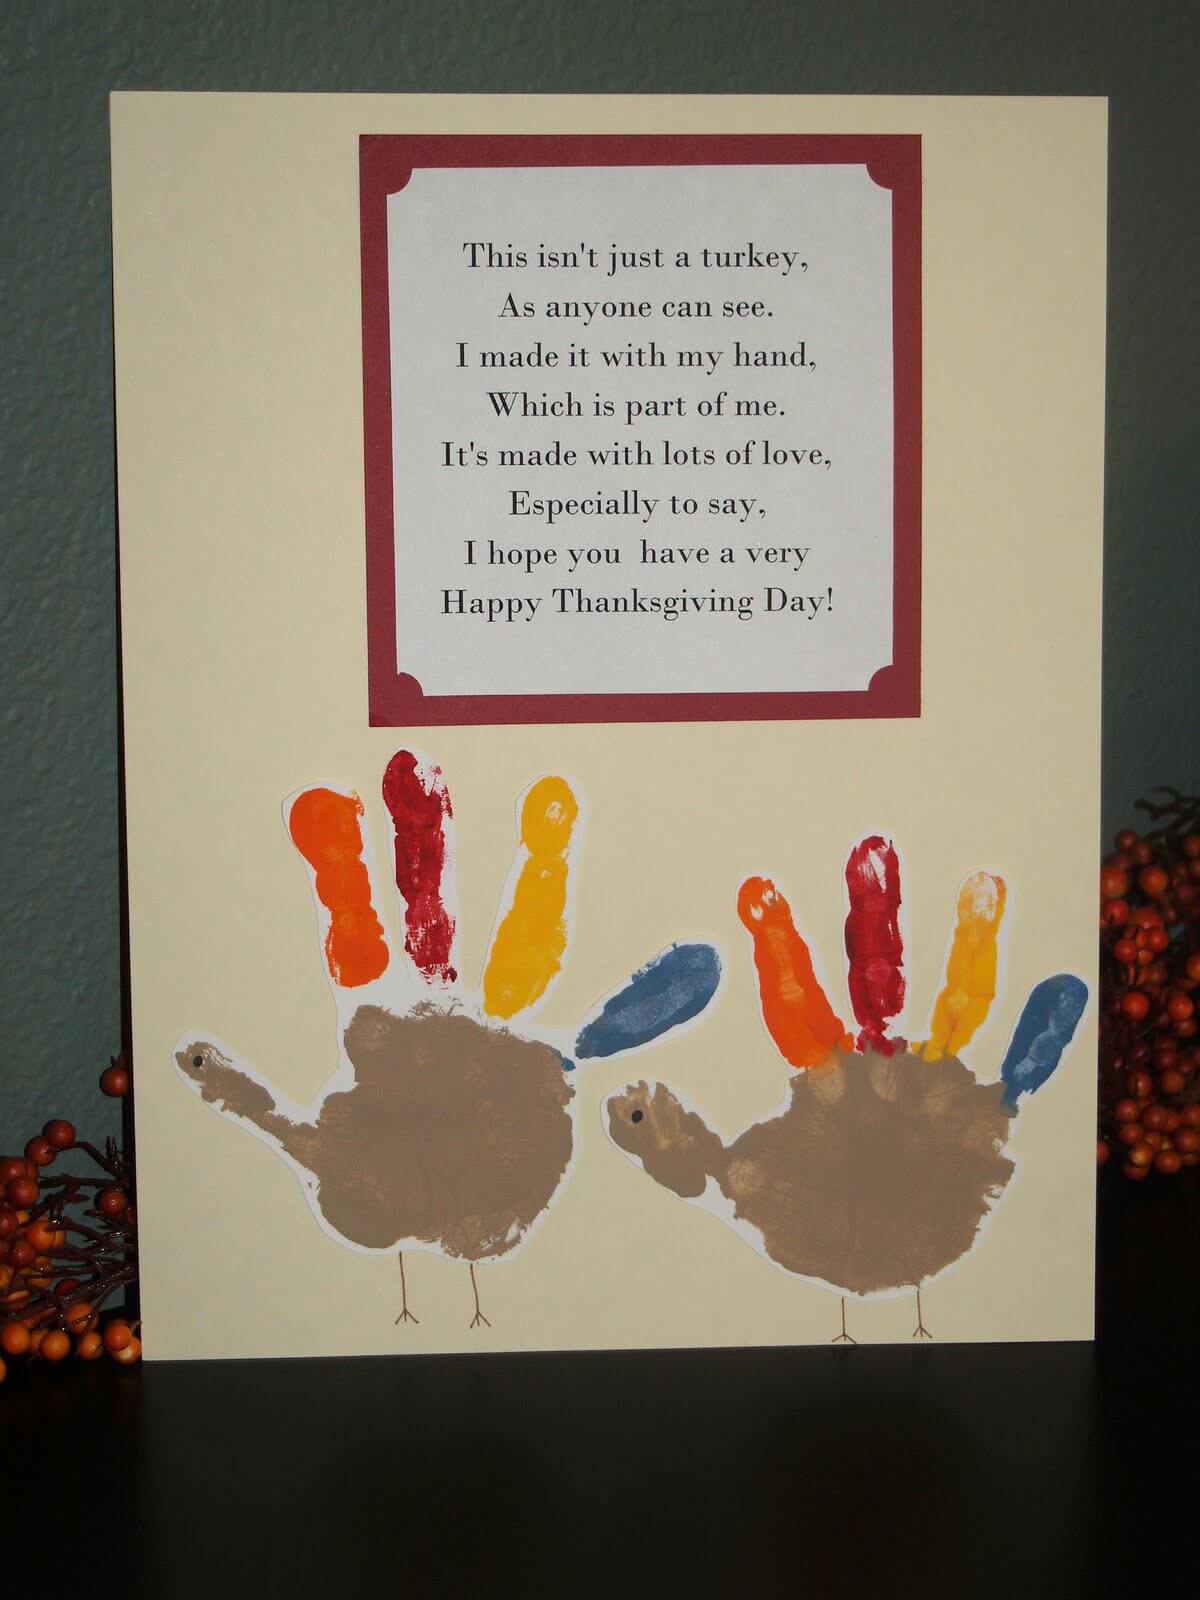 15 Heartwarming Thanksgiving Poems - Holiday Vault1200 x 1600